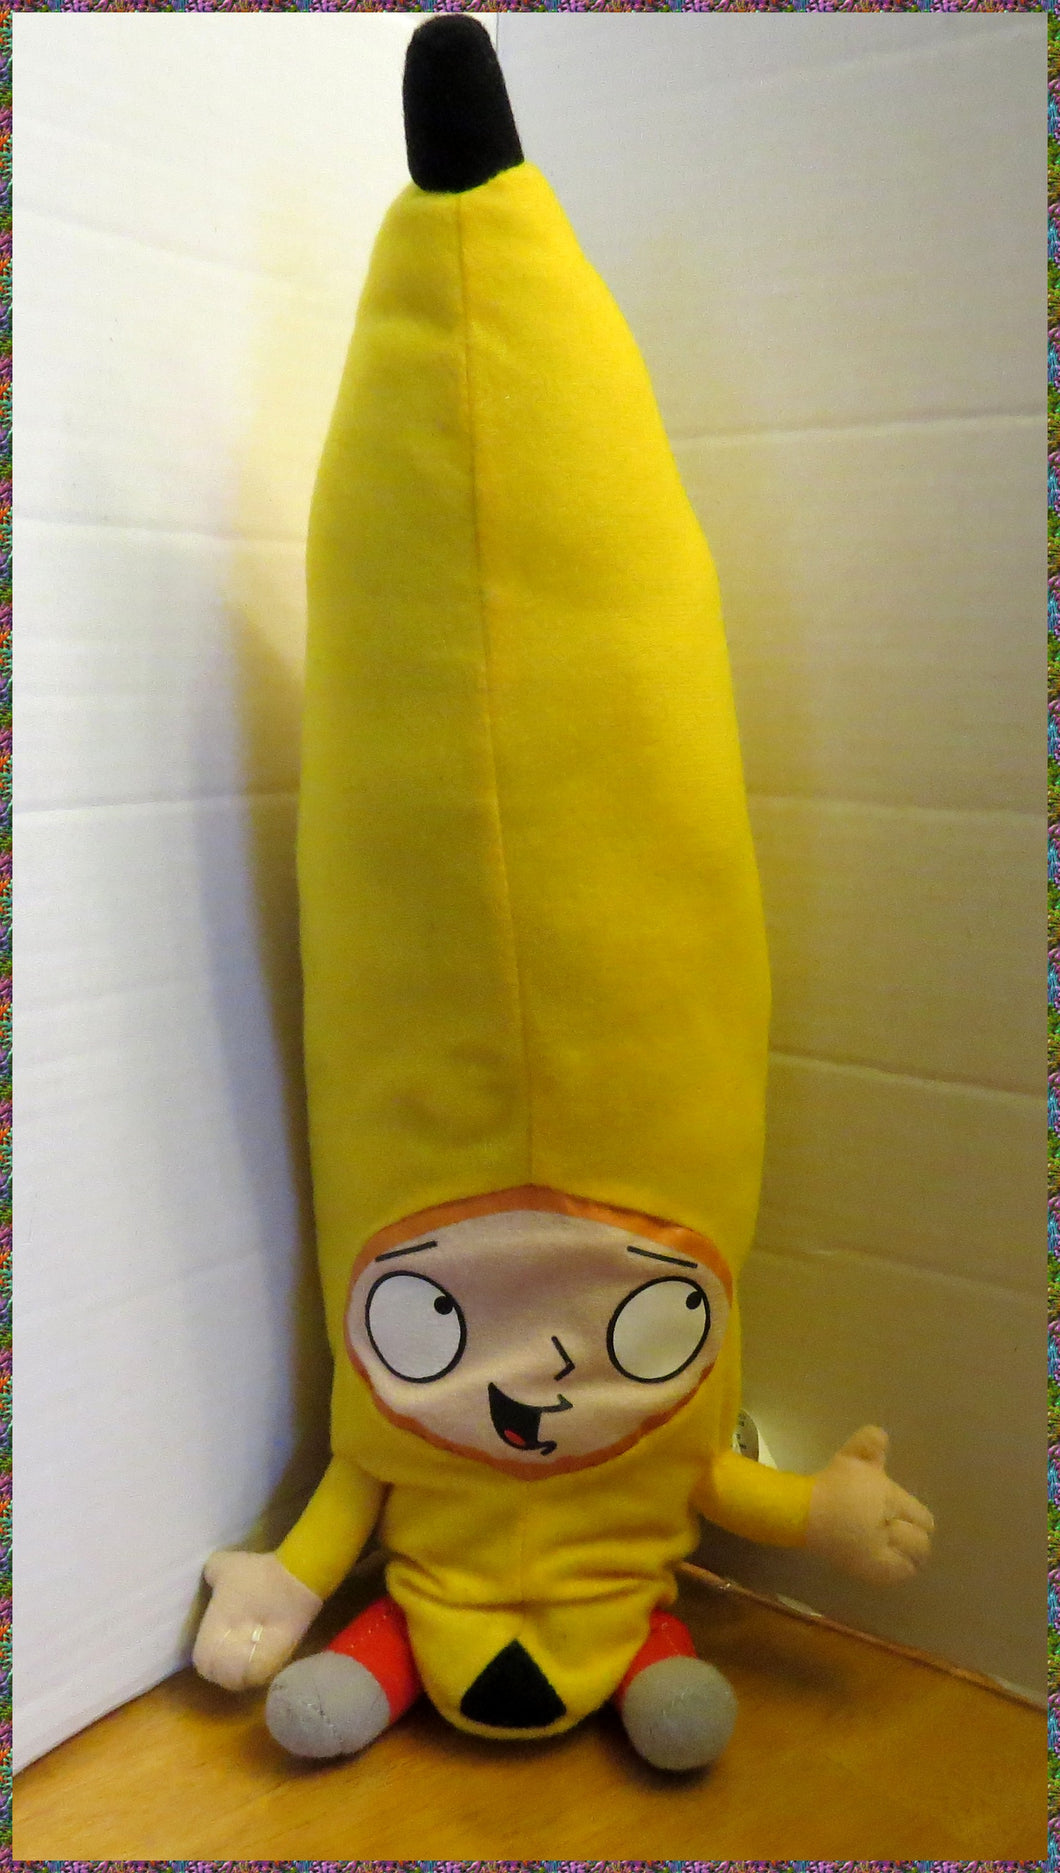 2011 FAMILY GUY - Stewie as a banana - doll / 17'' tall